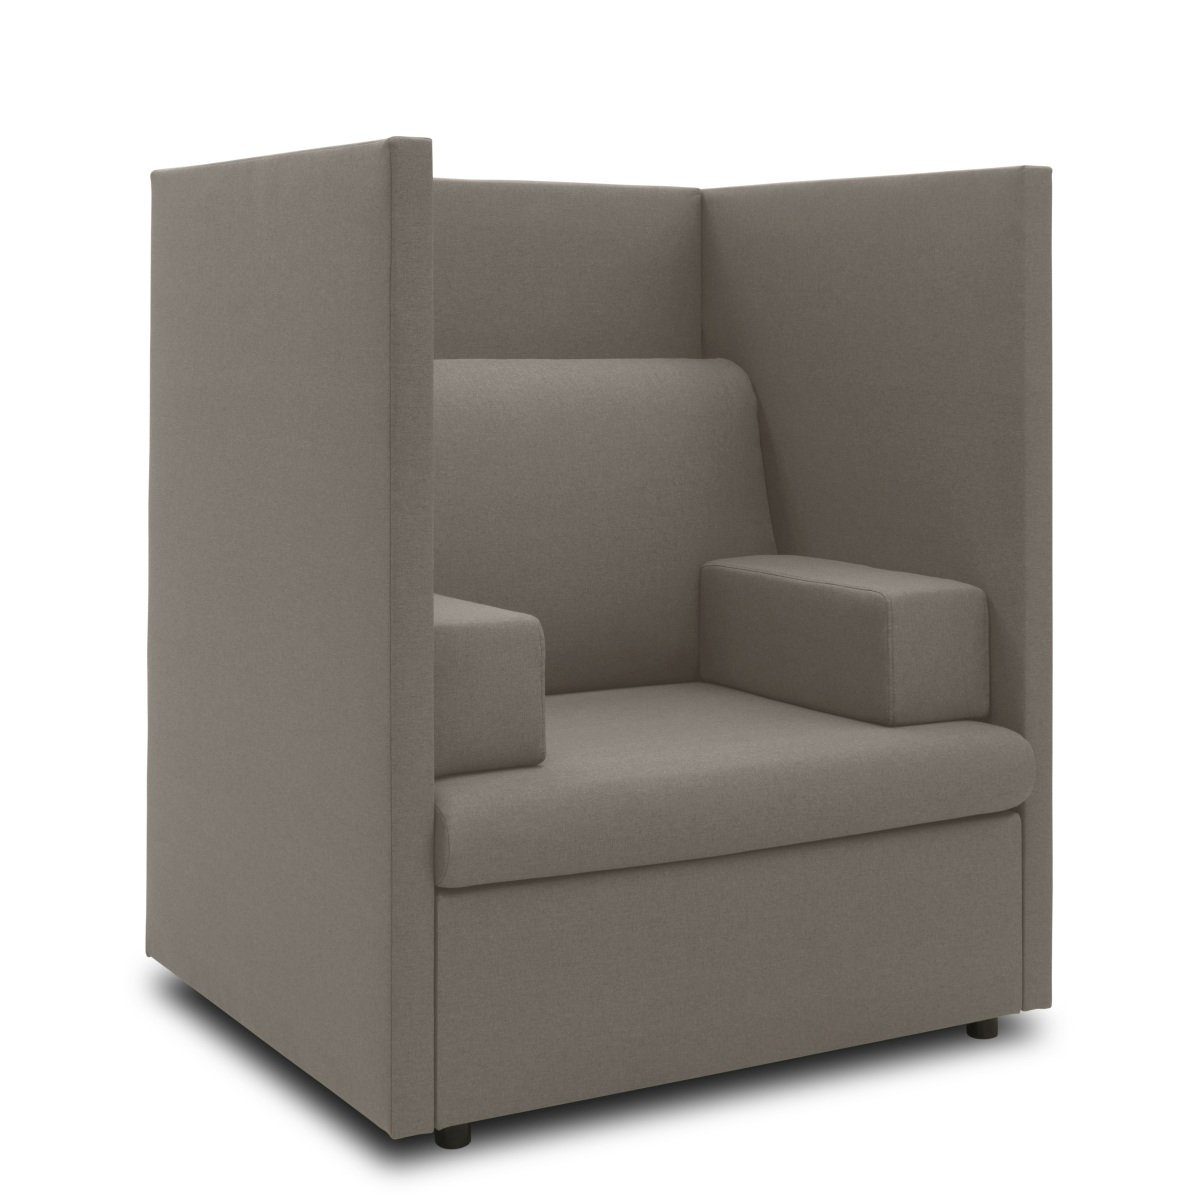 Authentizität garantiert! Pickup-Möbel Sofa Outdoor Gartensofa Einsitzer Teile, Sessel 1 wetterfest Sylt, wetterfest